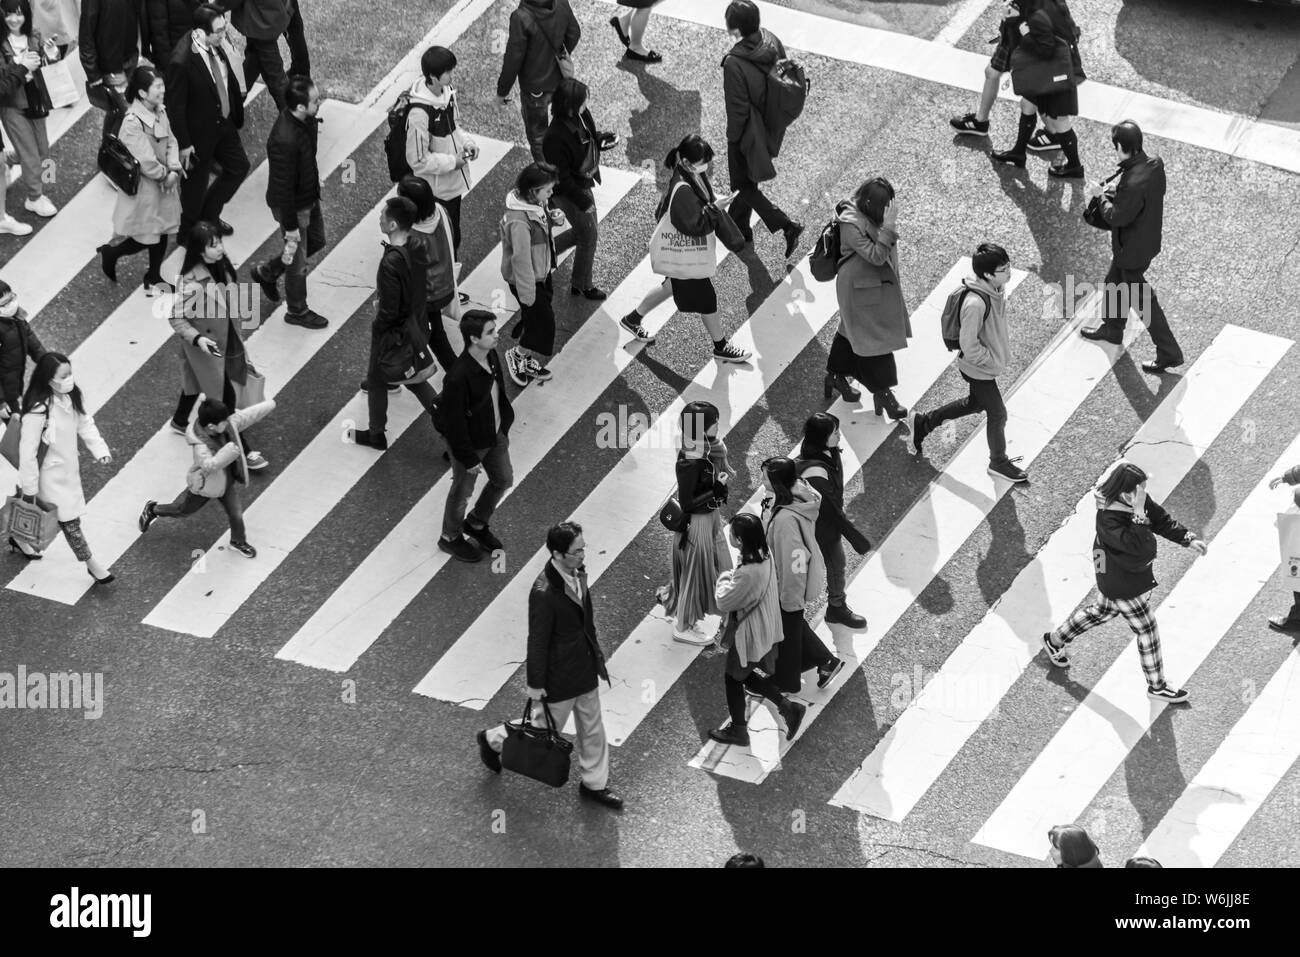 Shibuya crossing, crowds at intersection, many people cross zebra crossing, black and white, Shibuya, Udagawacho, Tokyo, Japan Stock Photo